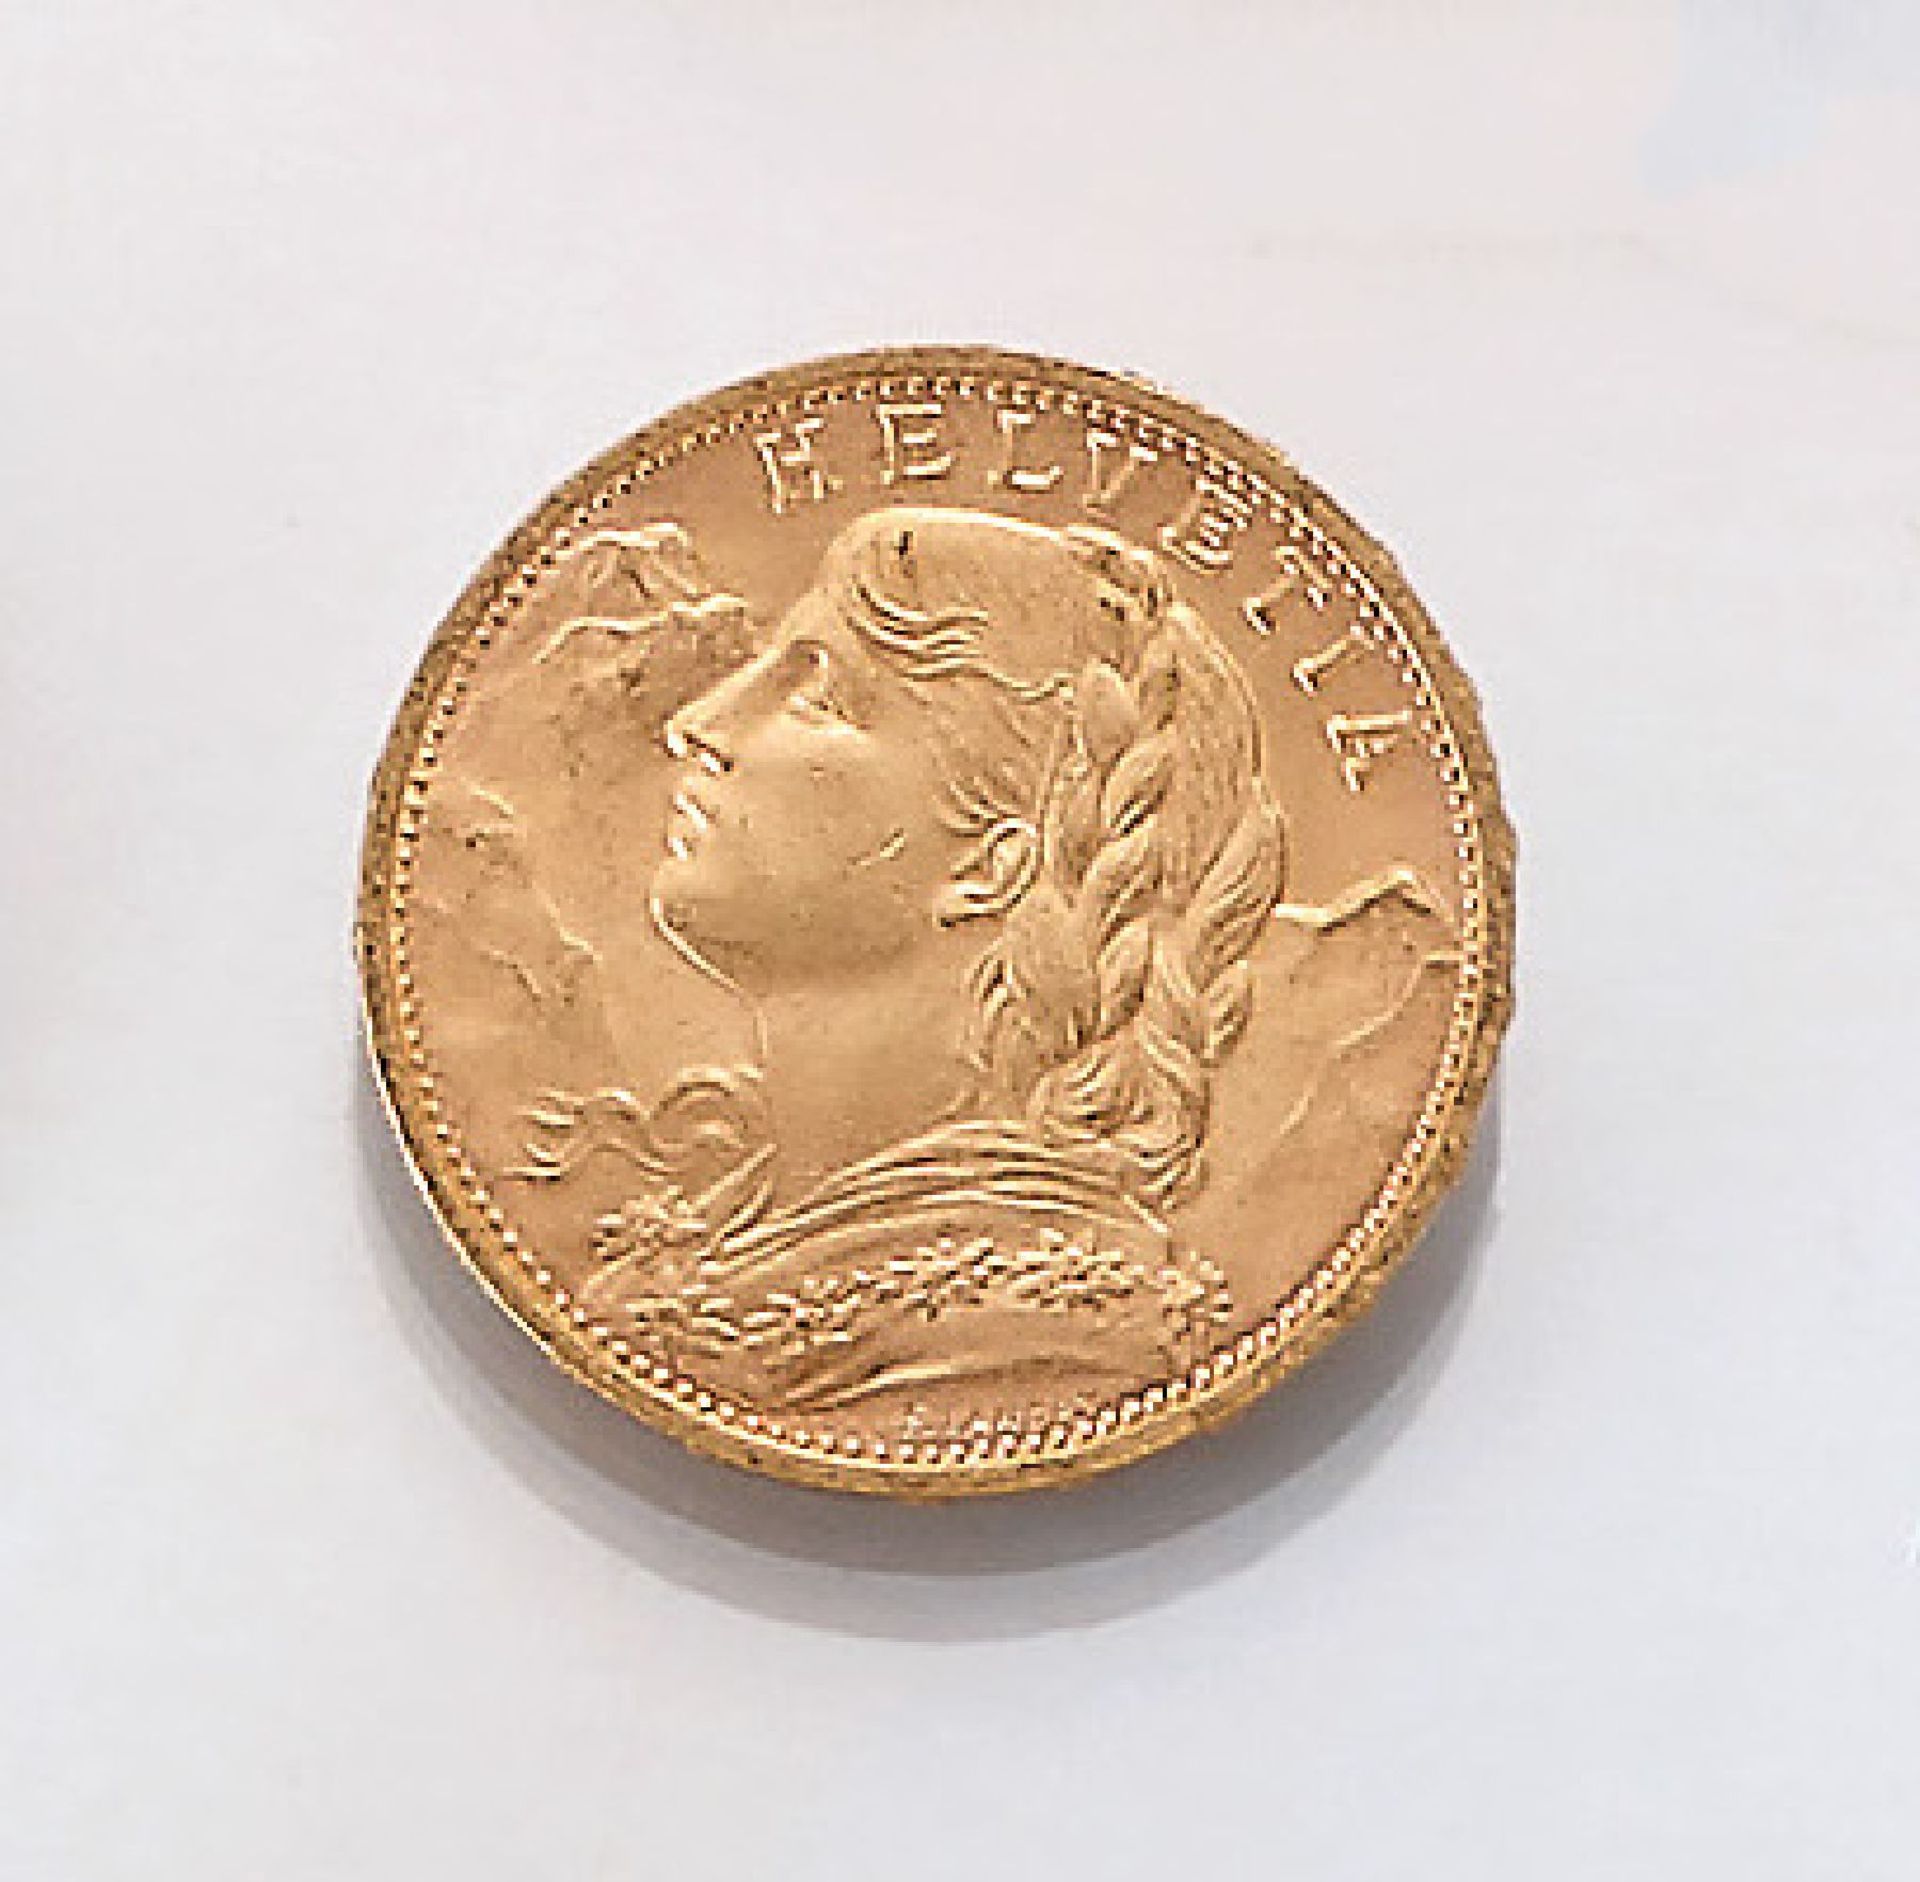 Gold coin, 20 Swiss Francs , Switzerland, 1927, so-called Vreneli, Helvetia, impressed mark B